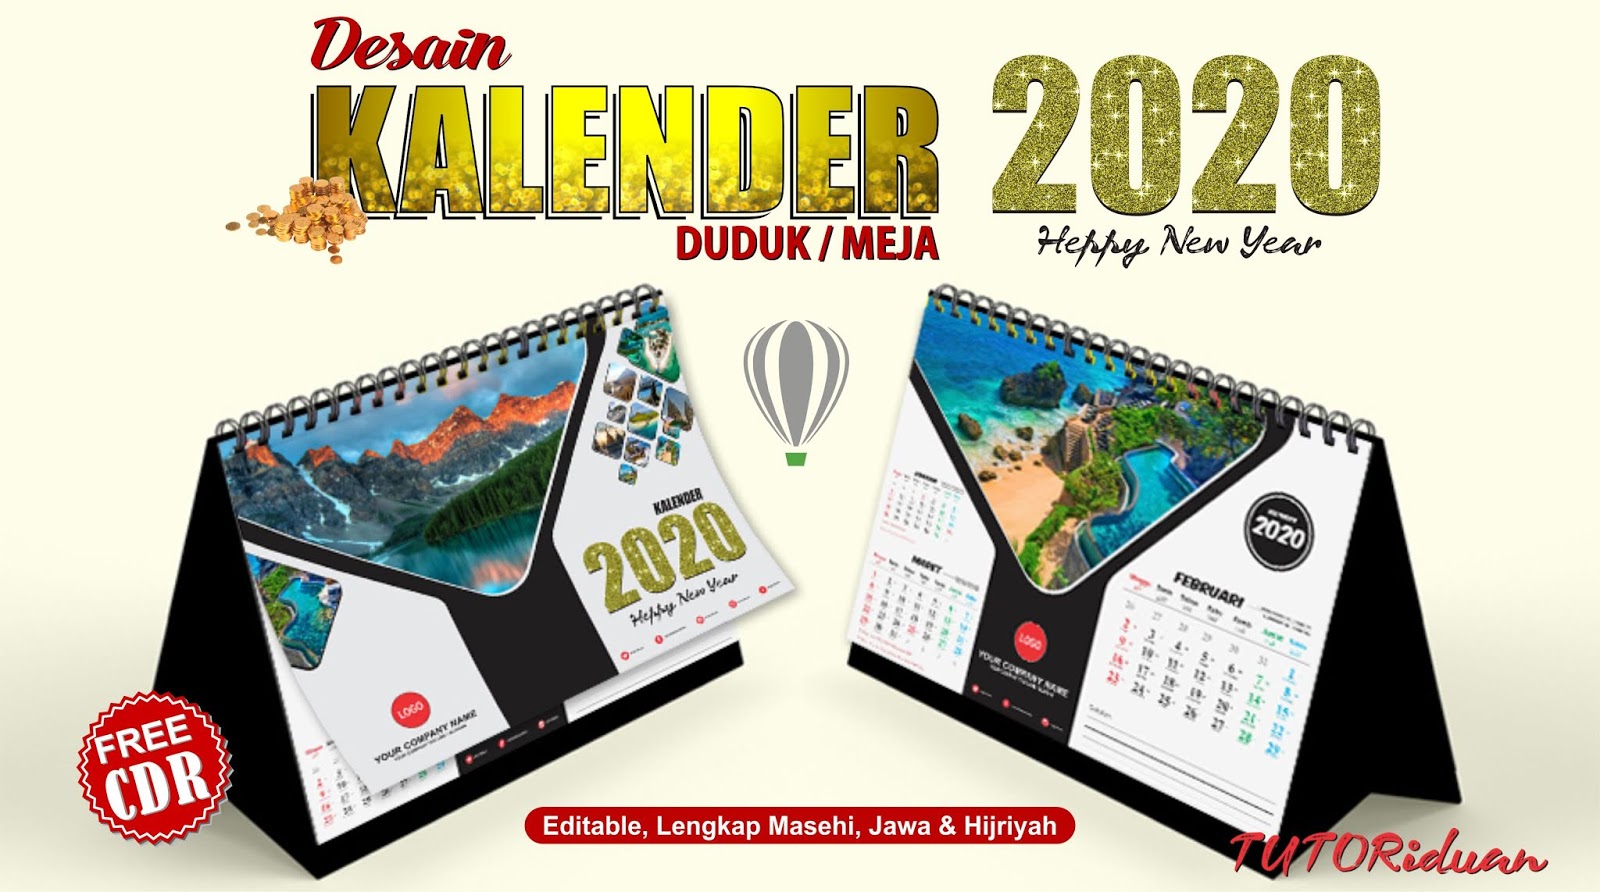 Desain Kalender Duduk 2022 dengan CorelDraw TUTORiduan com